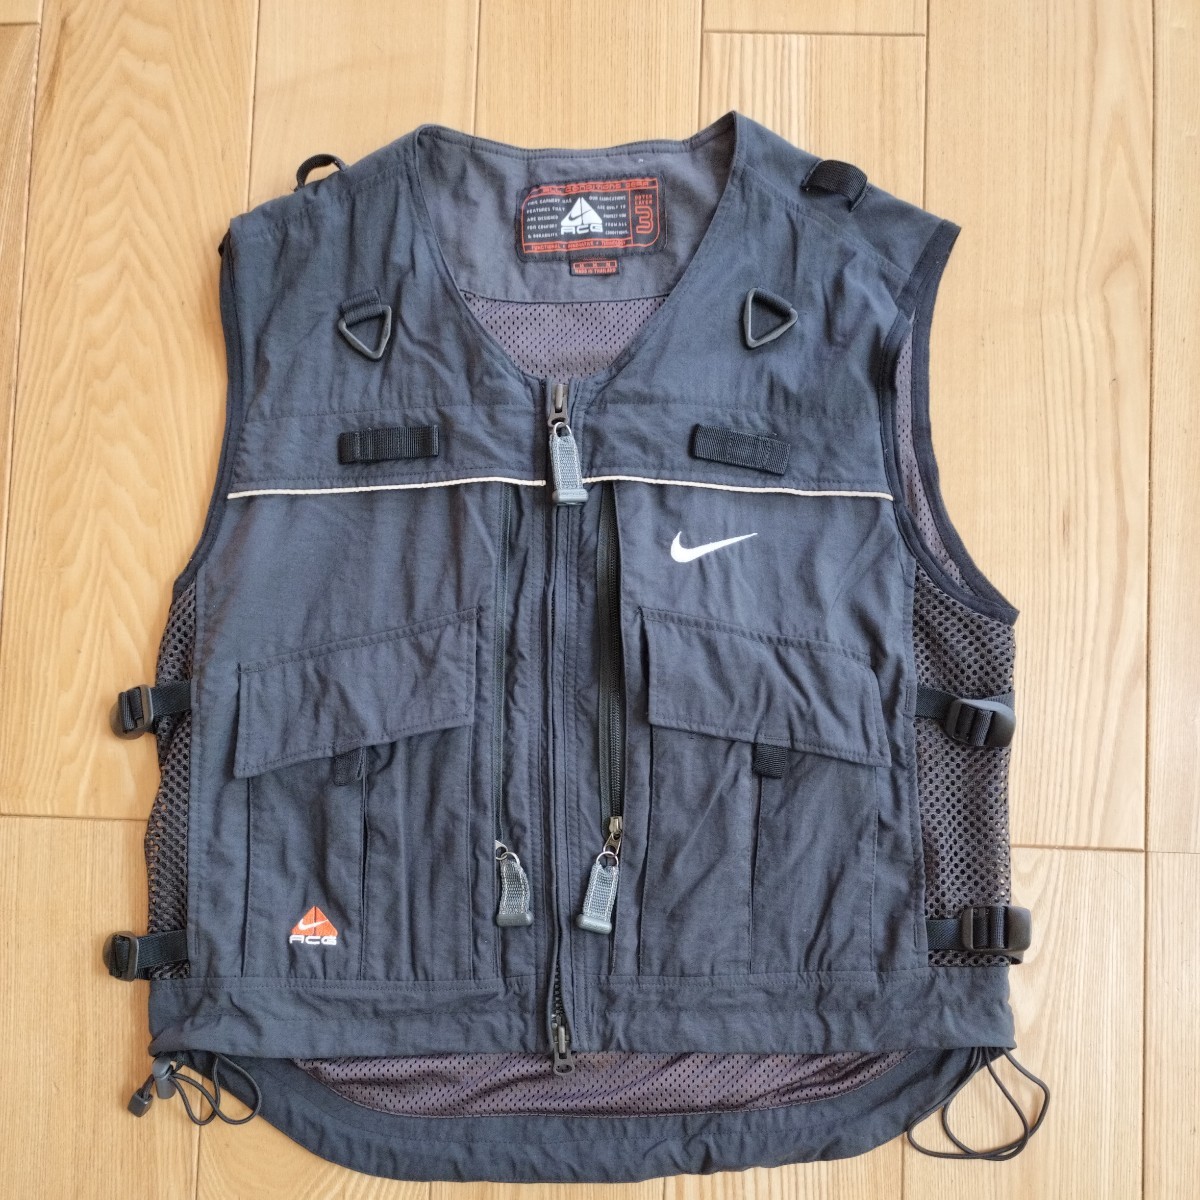 Nike ACG Utility Tactical Vest All Conditions Gear タクティカルベスト mmw sacai nocta ispa travis off white 90s 00s y2k